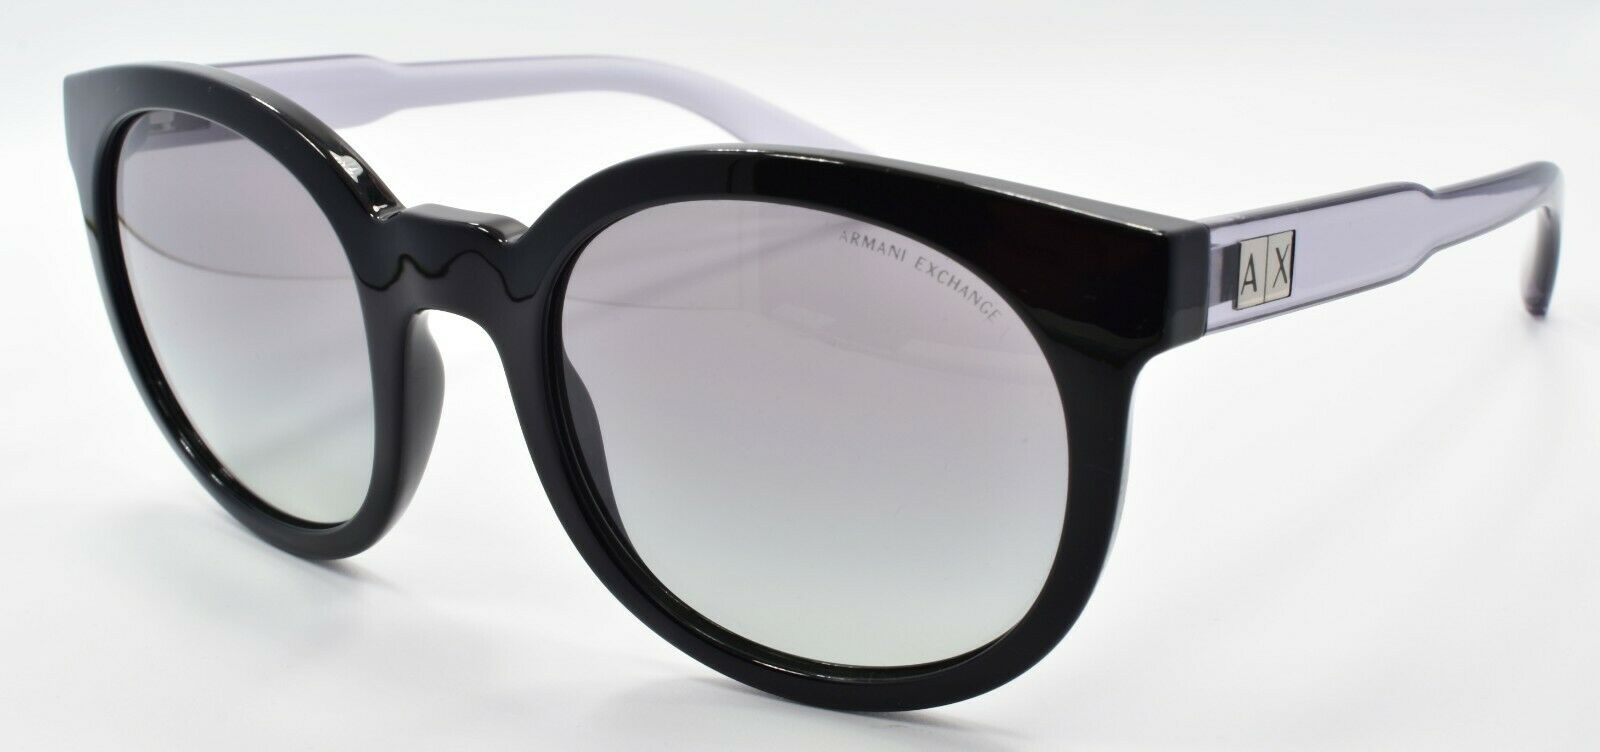 1-Armani Exchange AX4057S 820711 Women's Round Sunglasses Black / Grey Gradient-8053672627565-IKSpecs